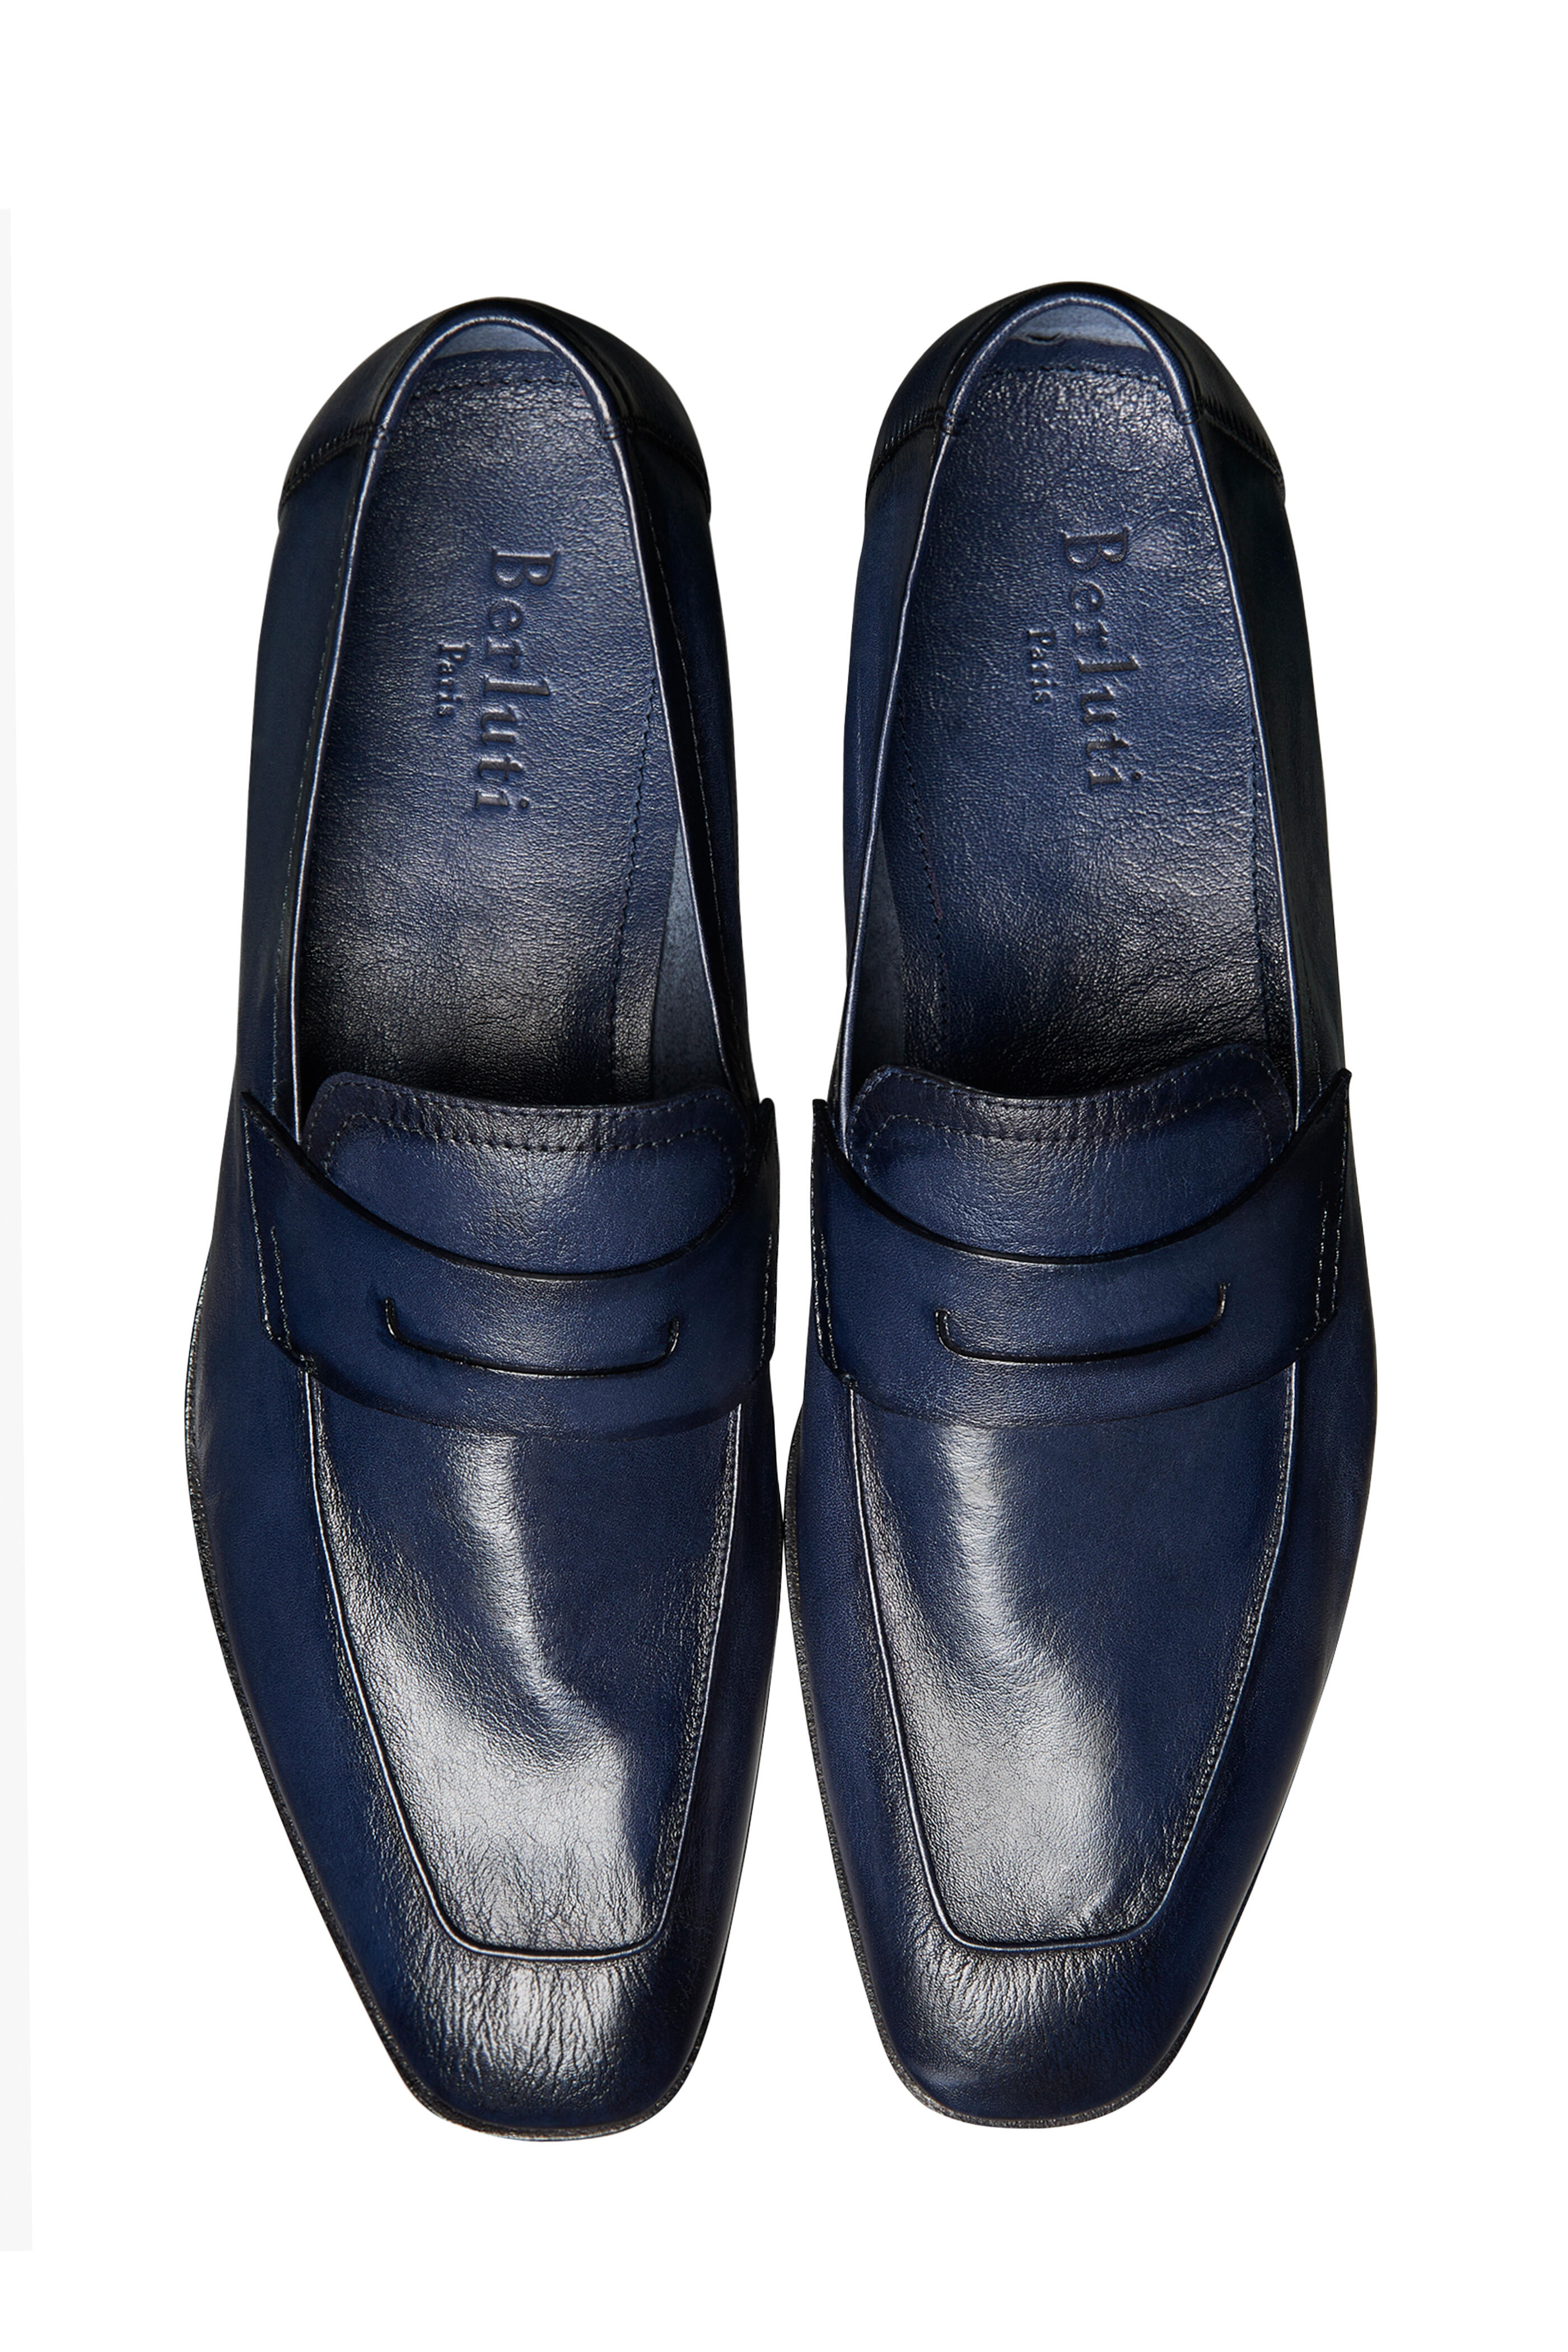 Berluti Lorenzo Rimini Leather Backless Loafers in Black for Men